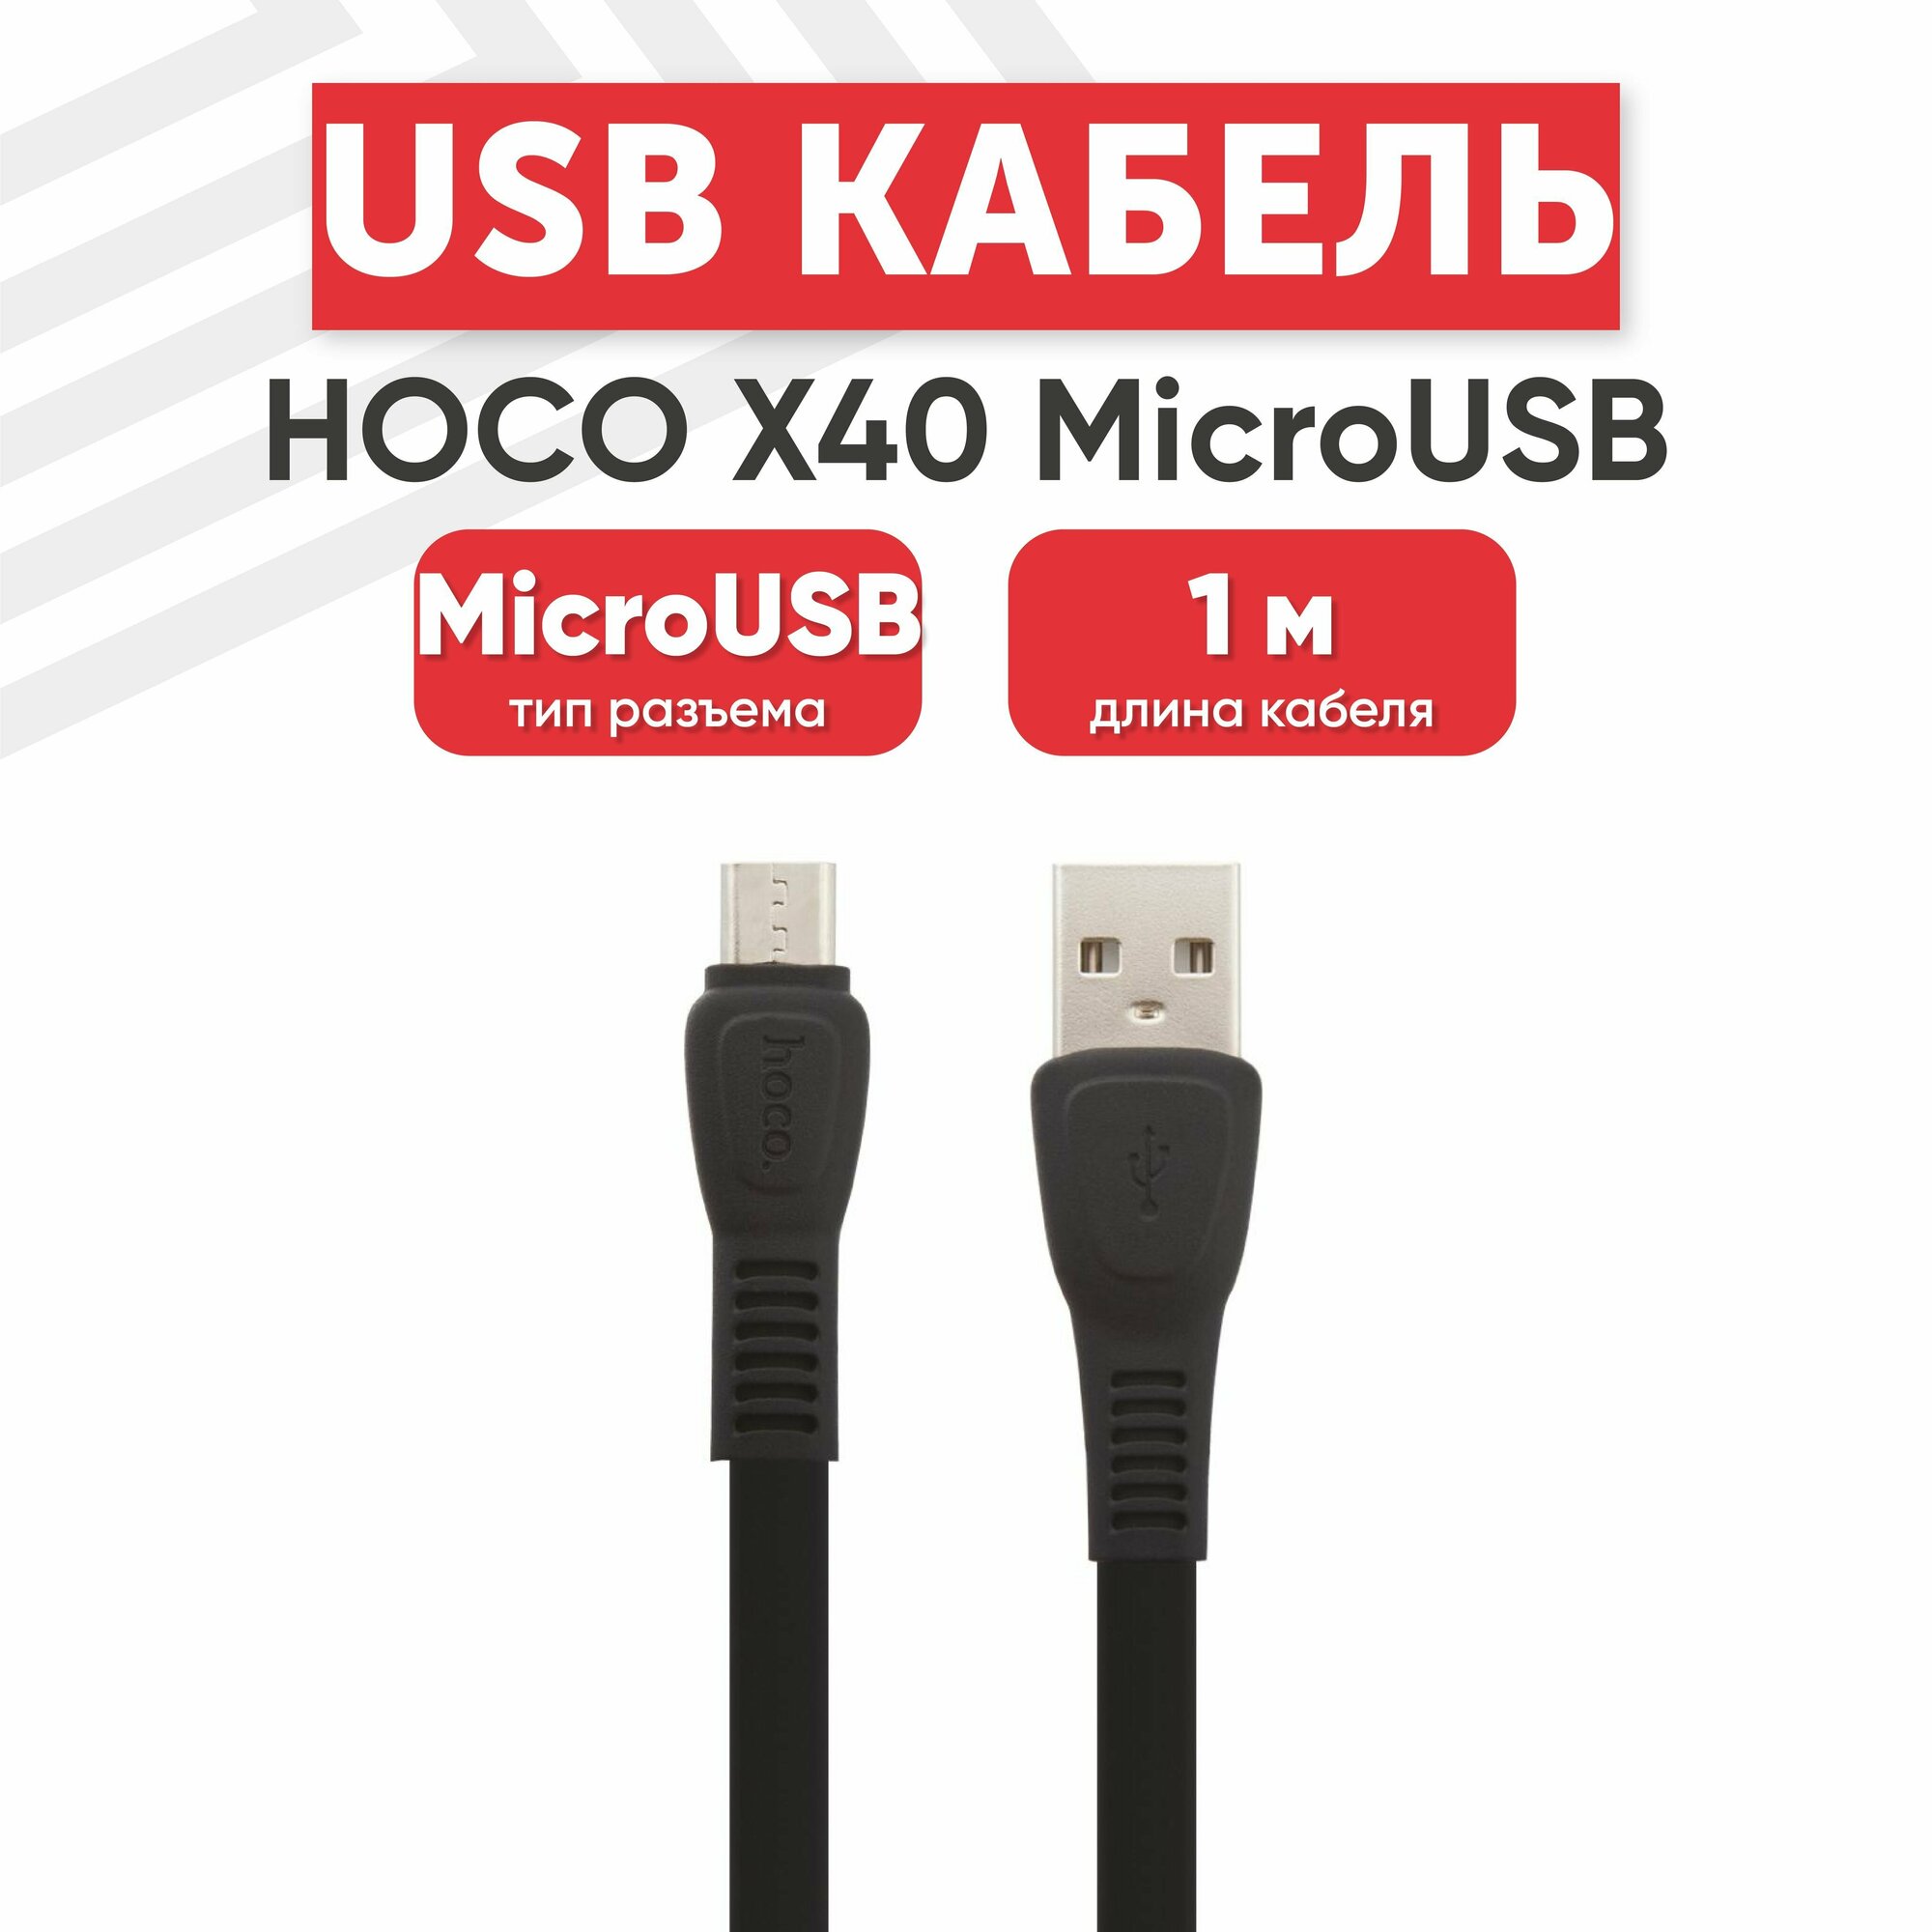 USB кабель Hoco X40 для зарядки, передачи данных, MicroUSB, 2.4А, 1 метр, TPE, черный